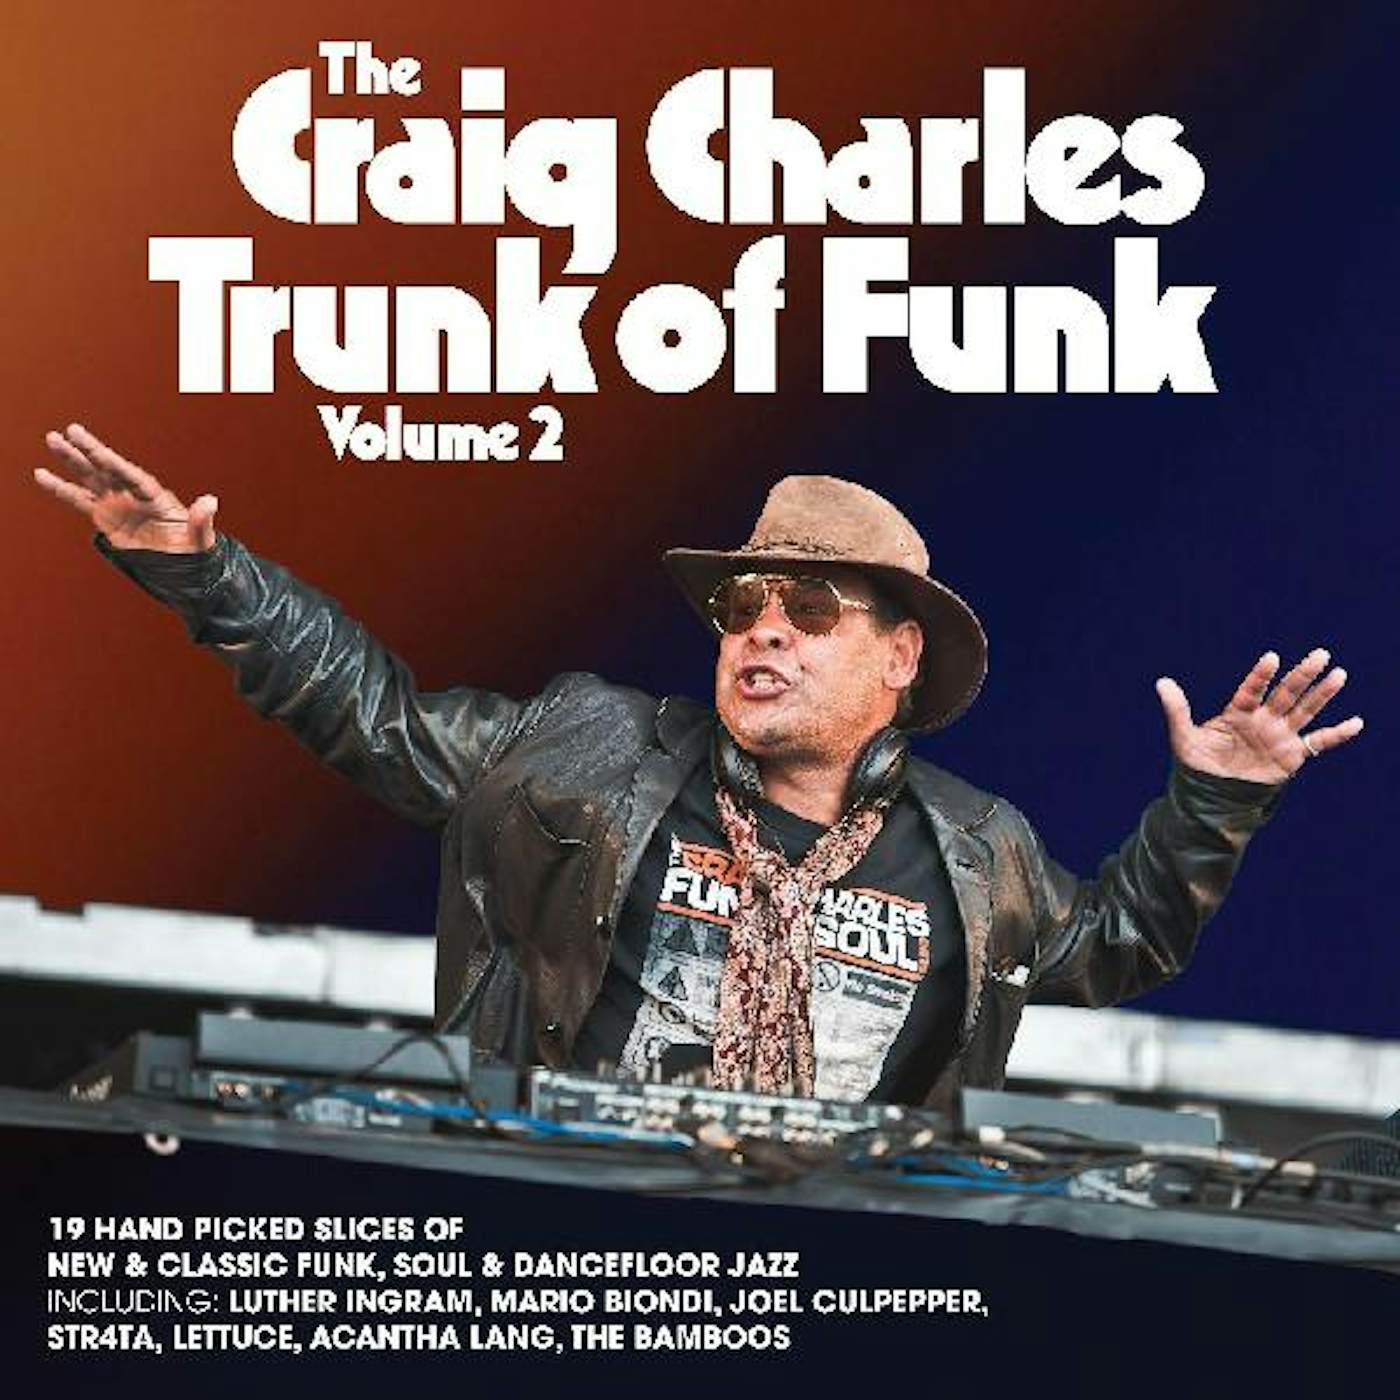 Craig Charles Trunk Of Funk Vol. 2 CD